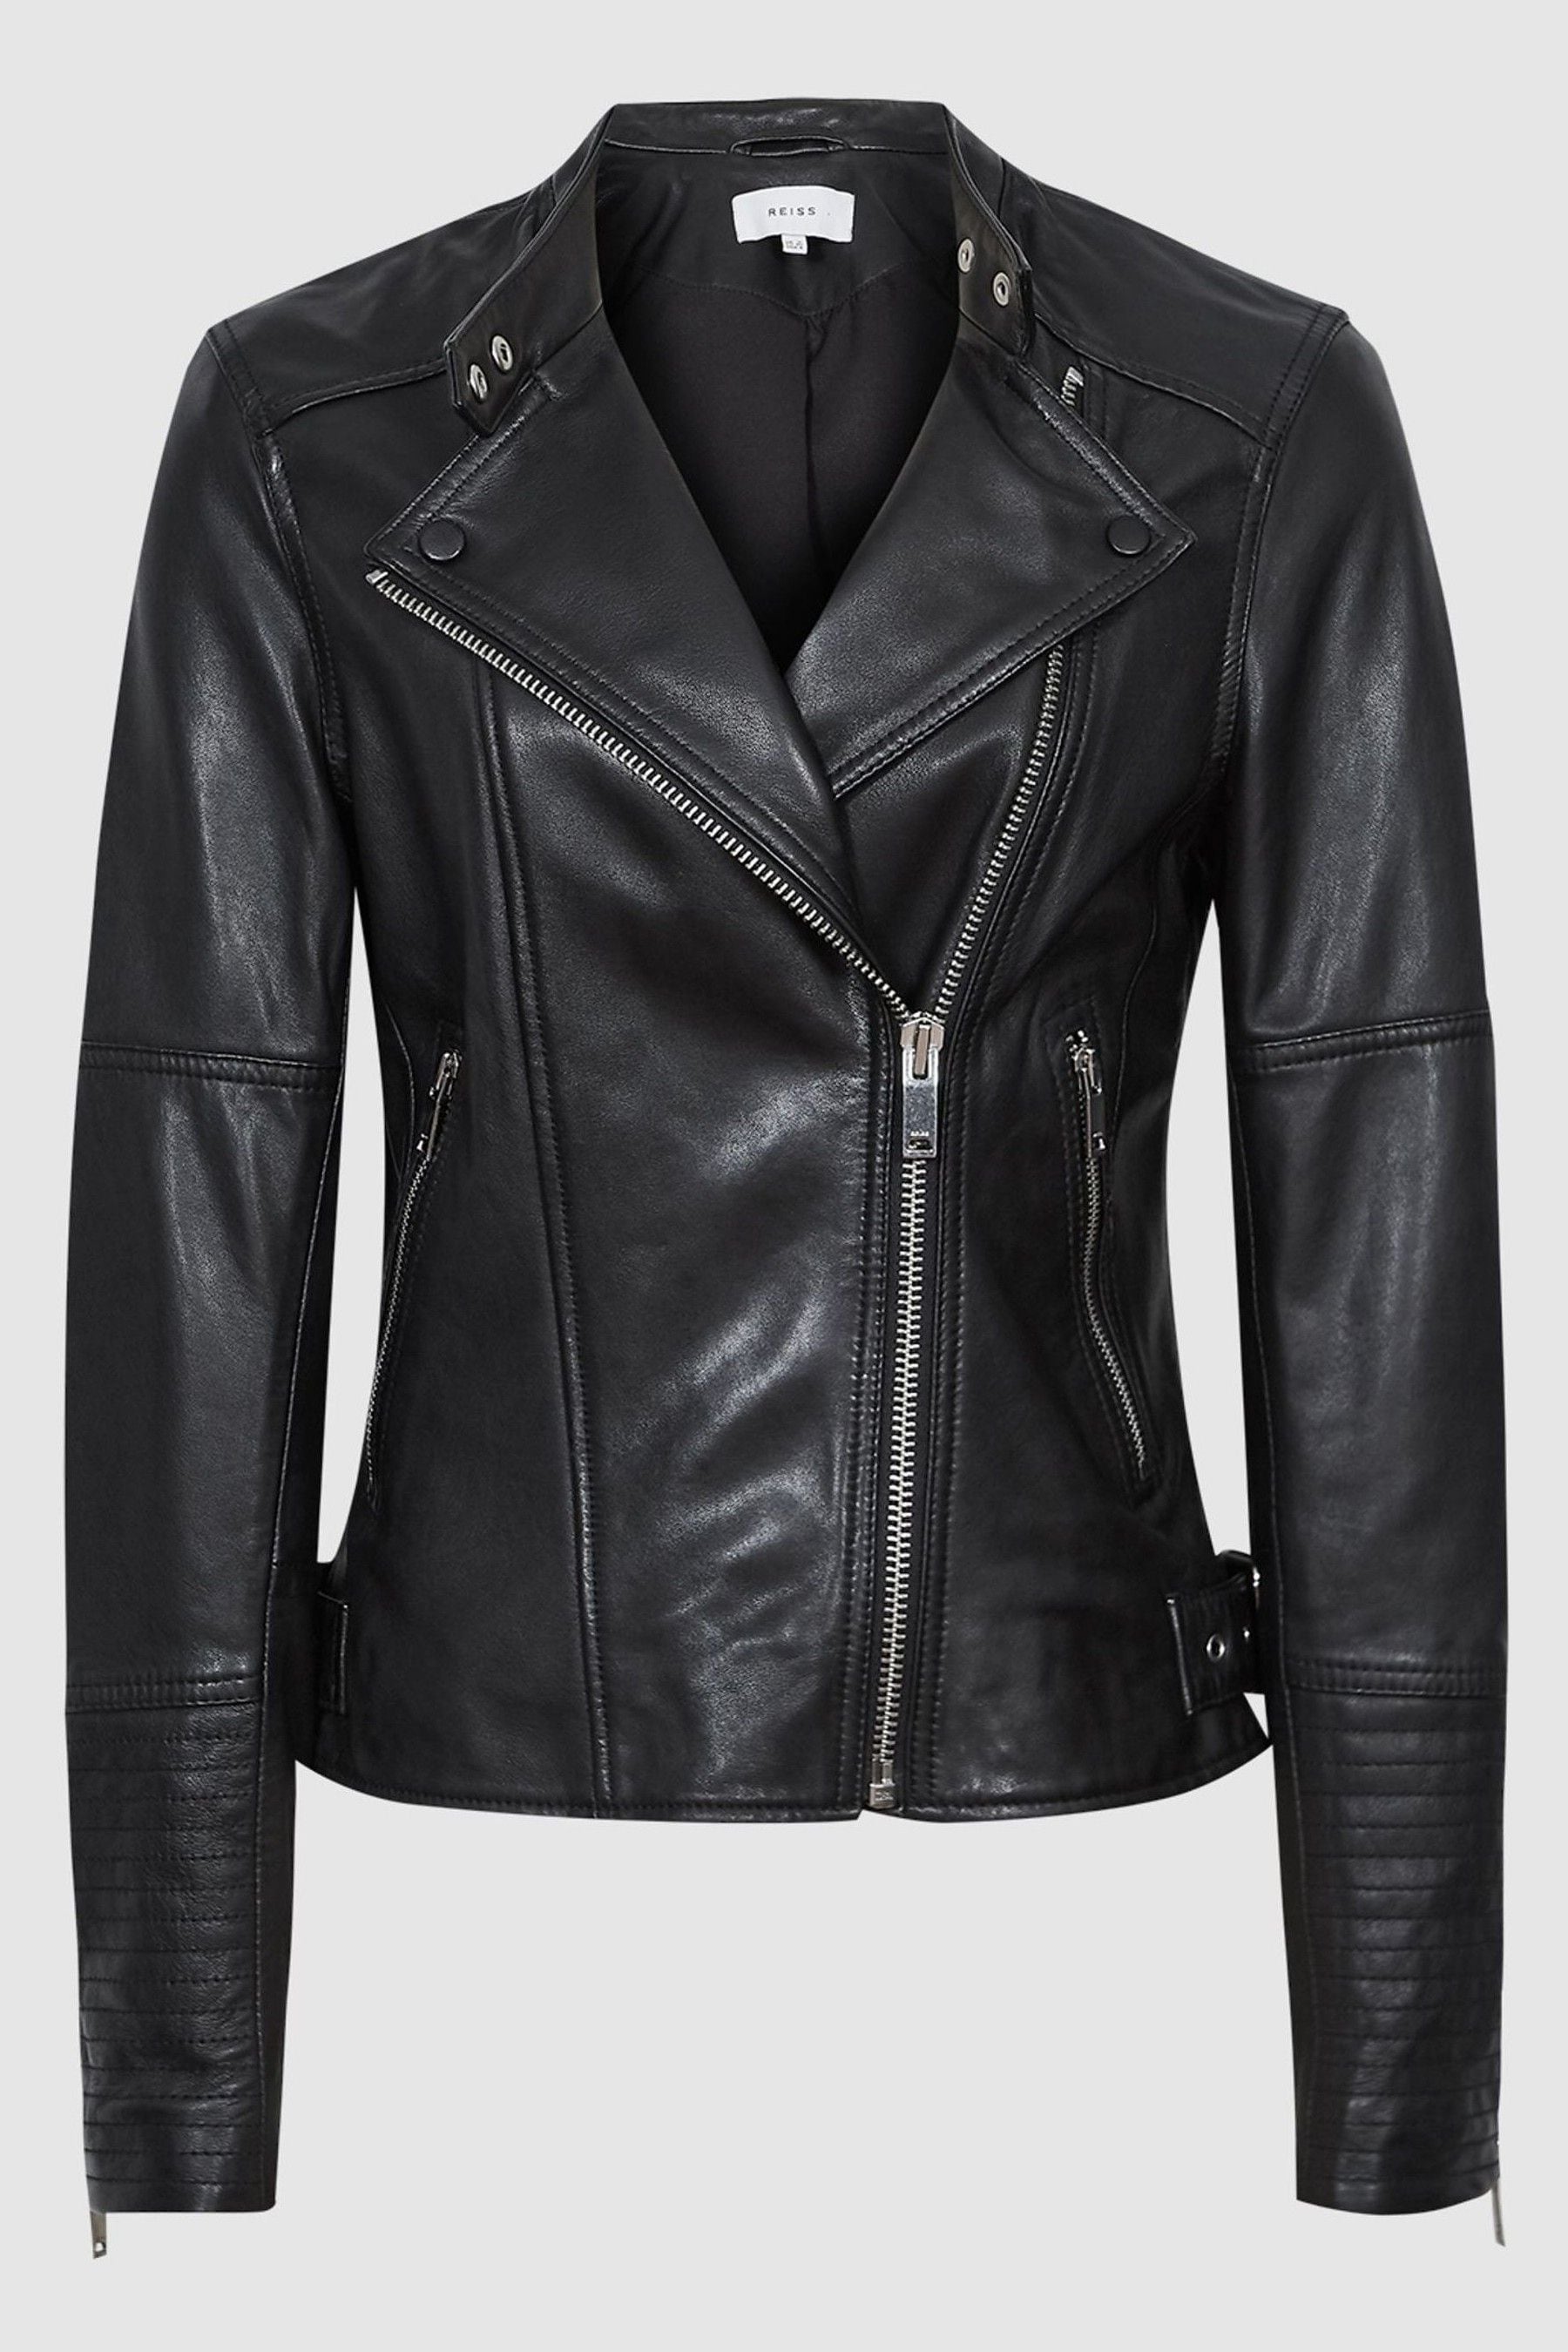 Buy Reiss Tallis Leather Biker Jacket from Next Australia